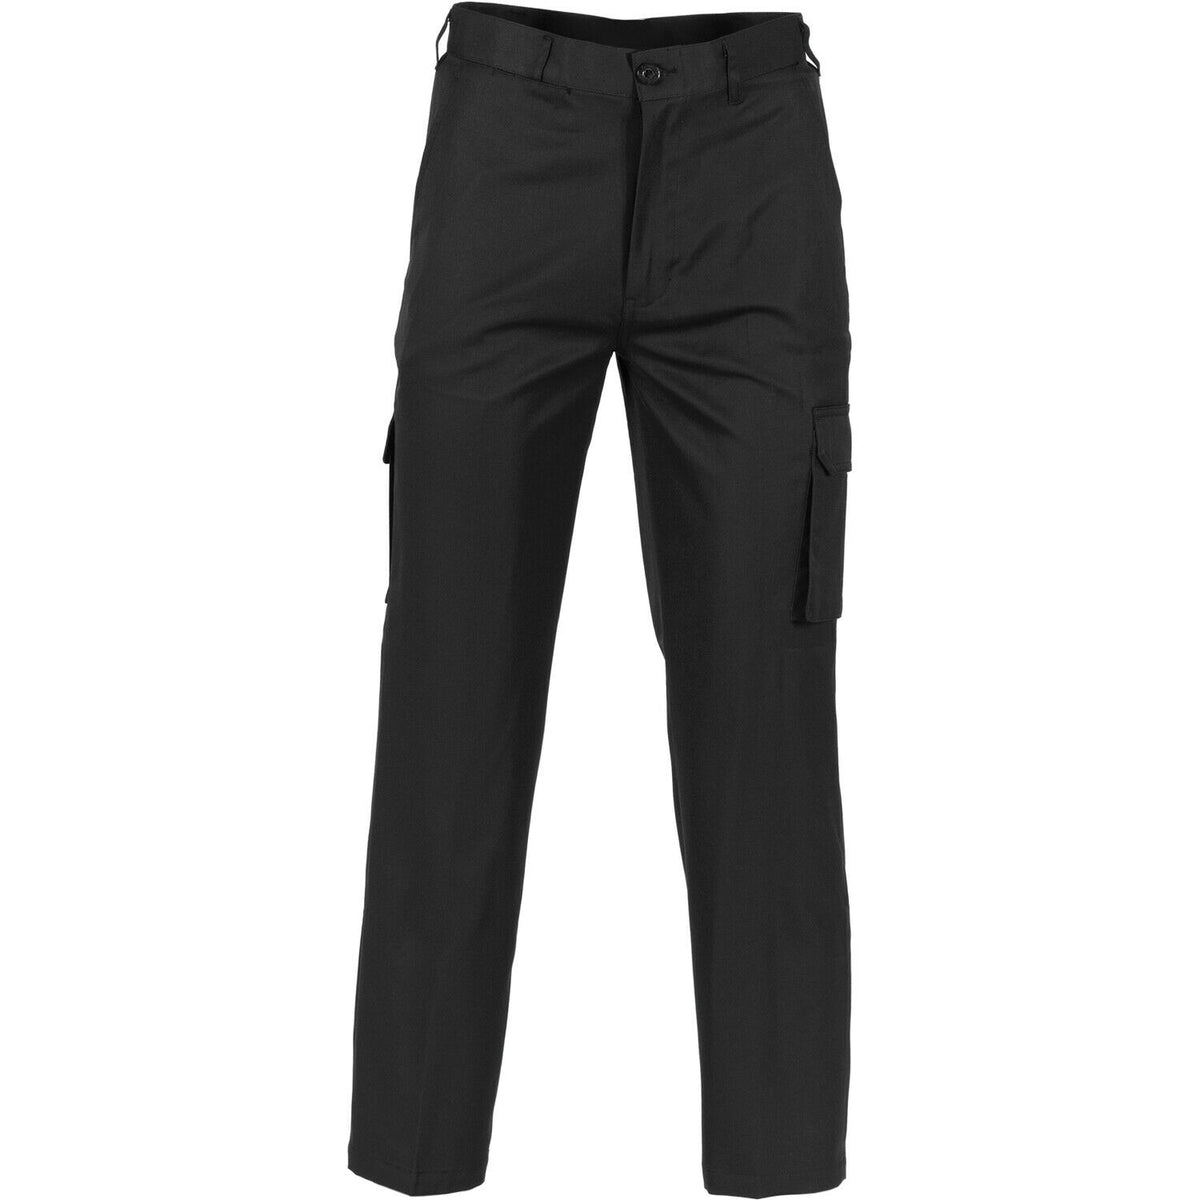 DNC Workwear Mens Permanent Press Cargo Pants Comfortable Work 4504